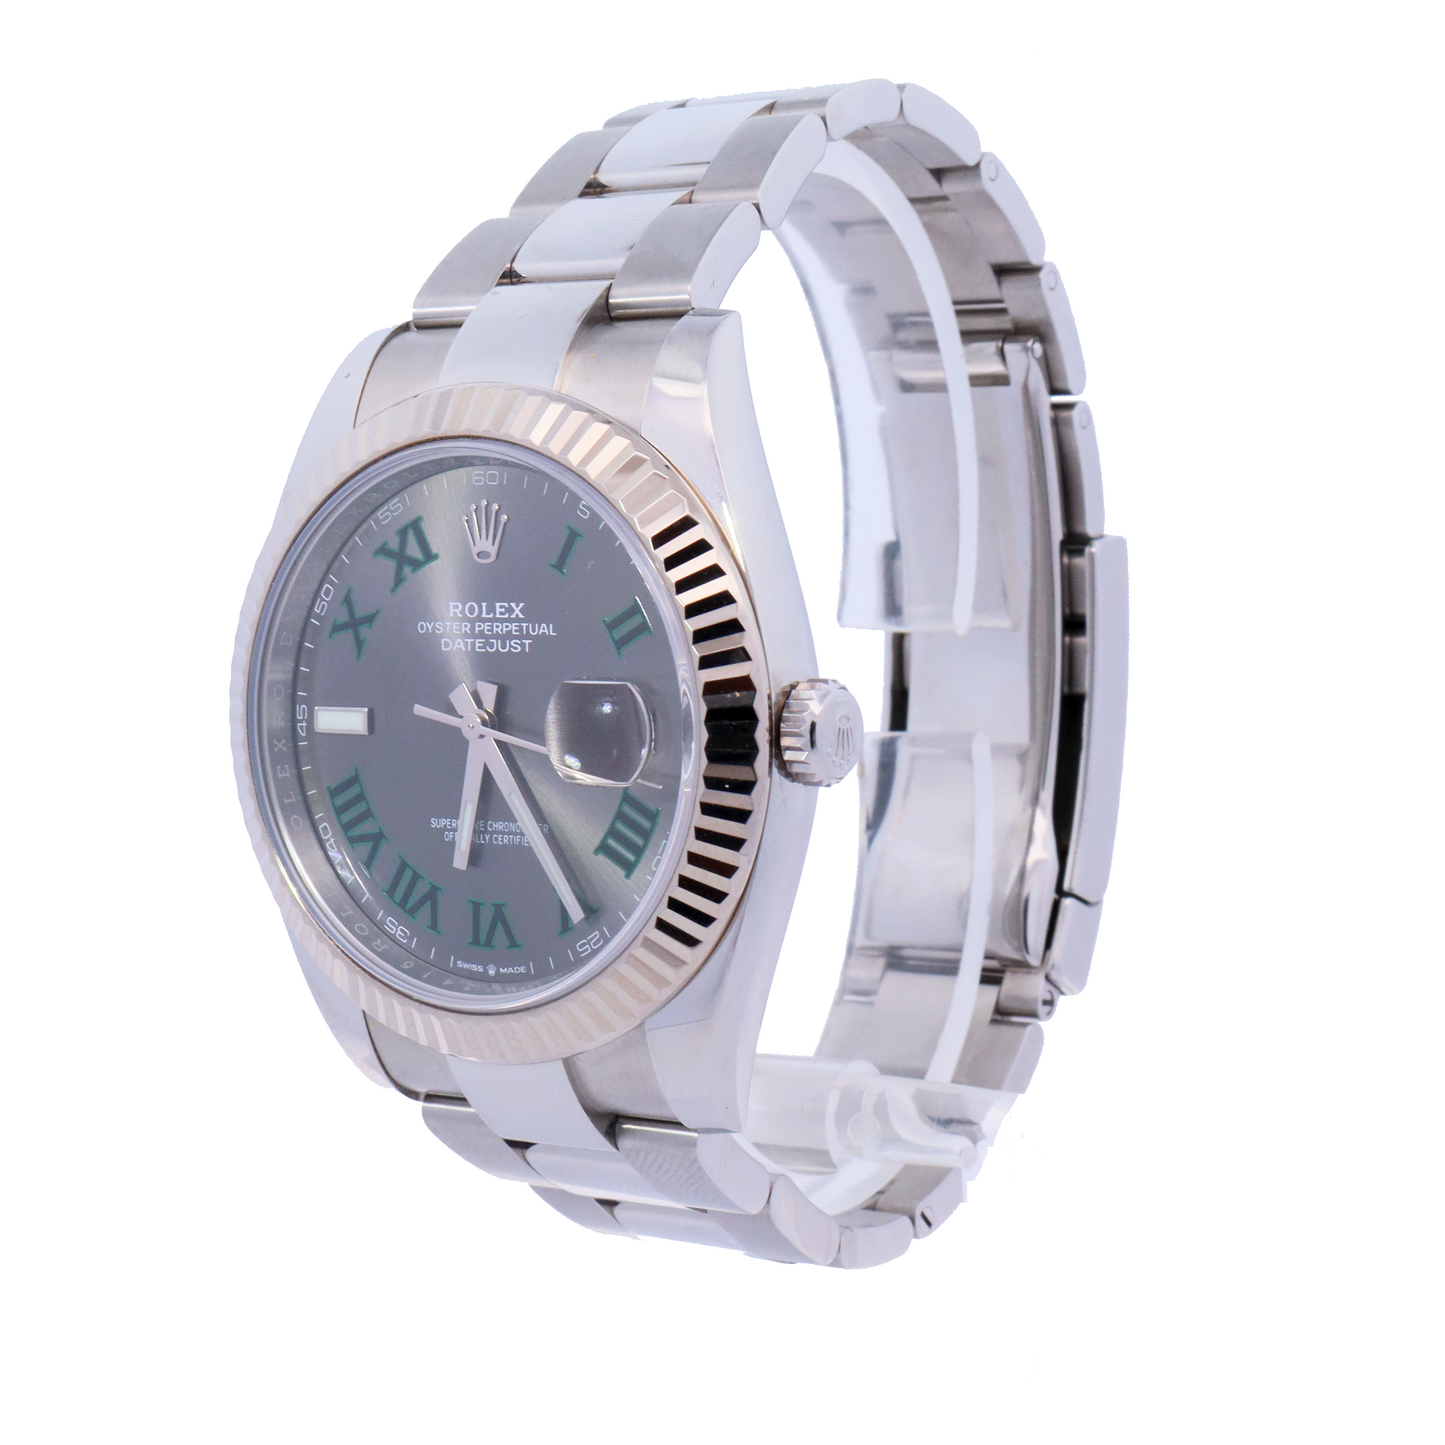 Load image into Gallery viewer, Rolex Datejust Stainless Steel 41mm Wimbeldon Roman Dial Watch | Ref# 126334 - Happy Jewelers Fine Jewelry Lifetime Warranty
